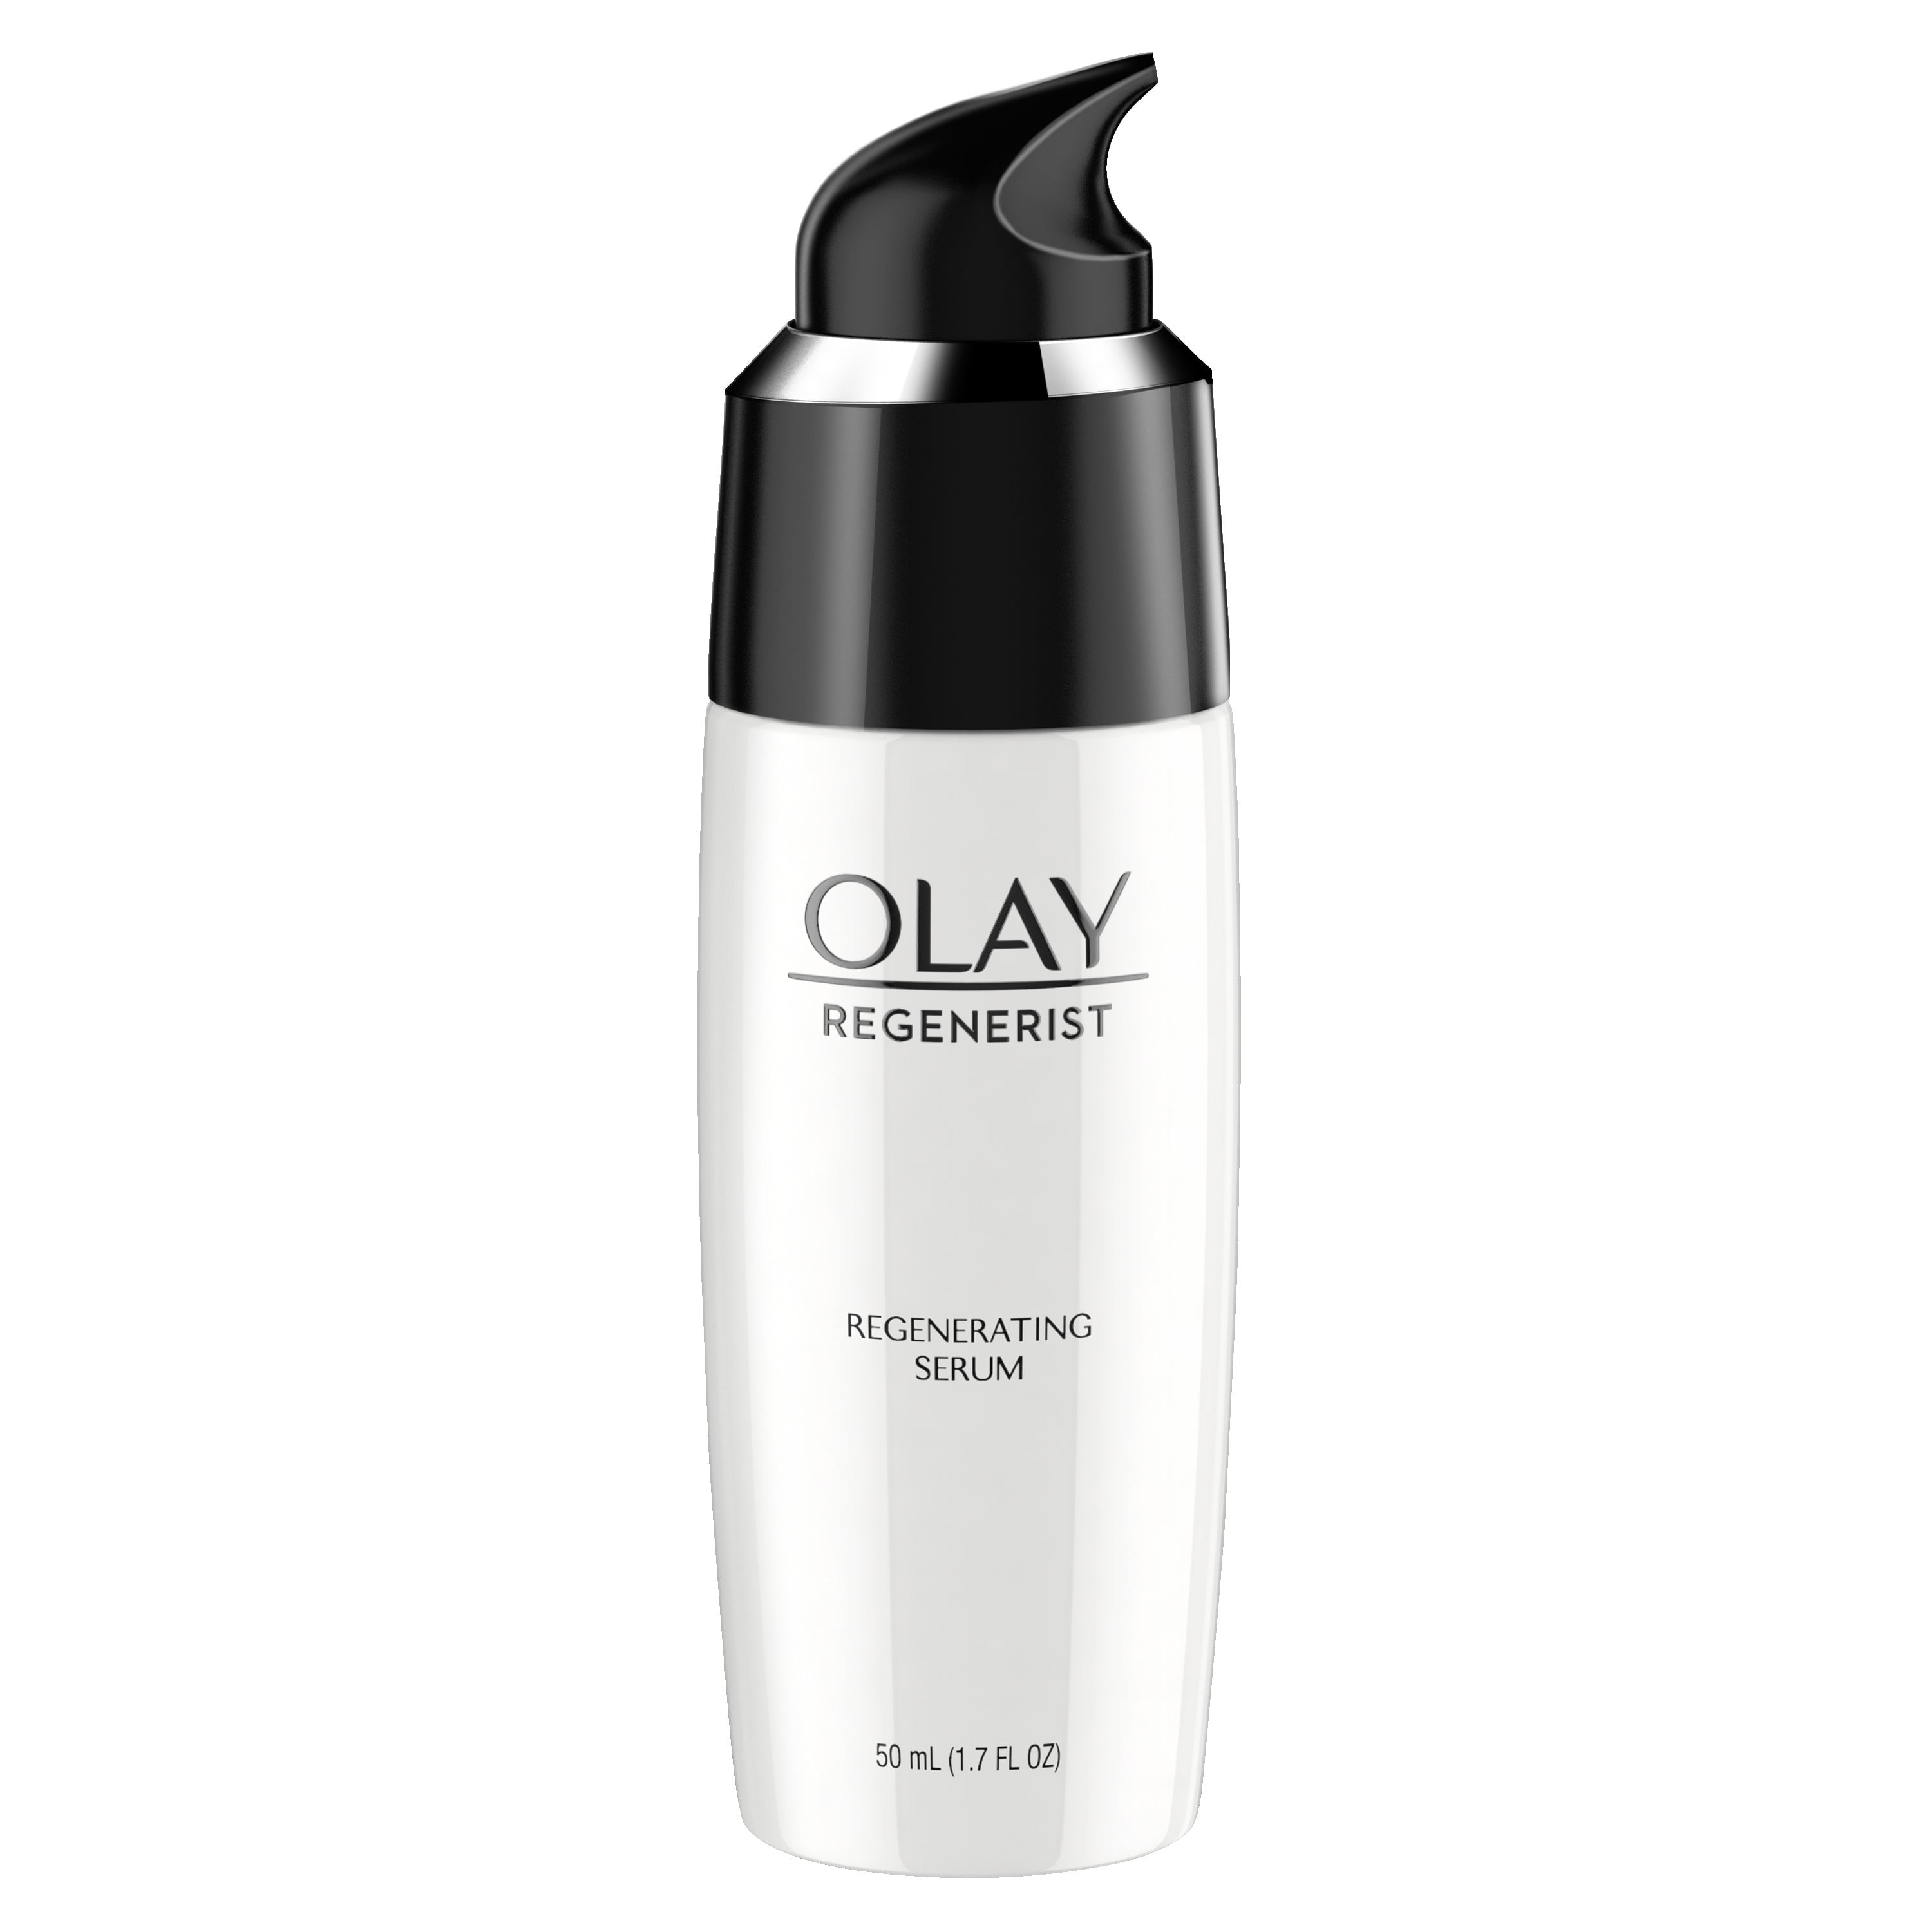 olay-regenerist-regenerating-serum-light-gel-face-moisturizer-1-7-fl